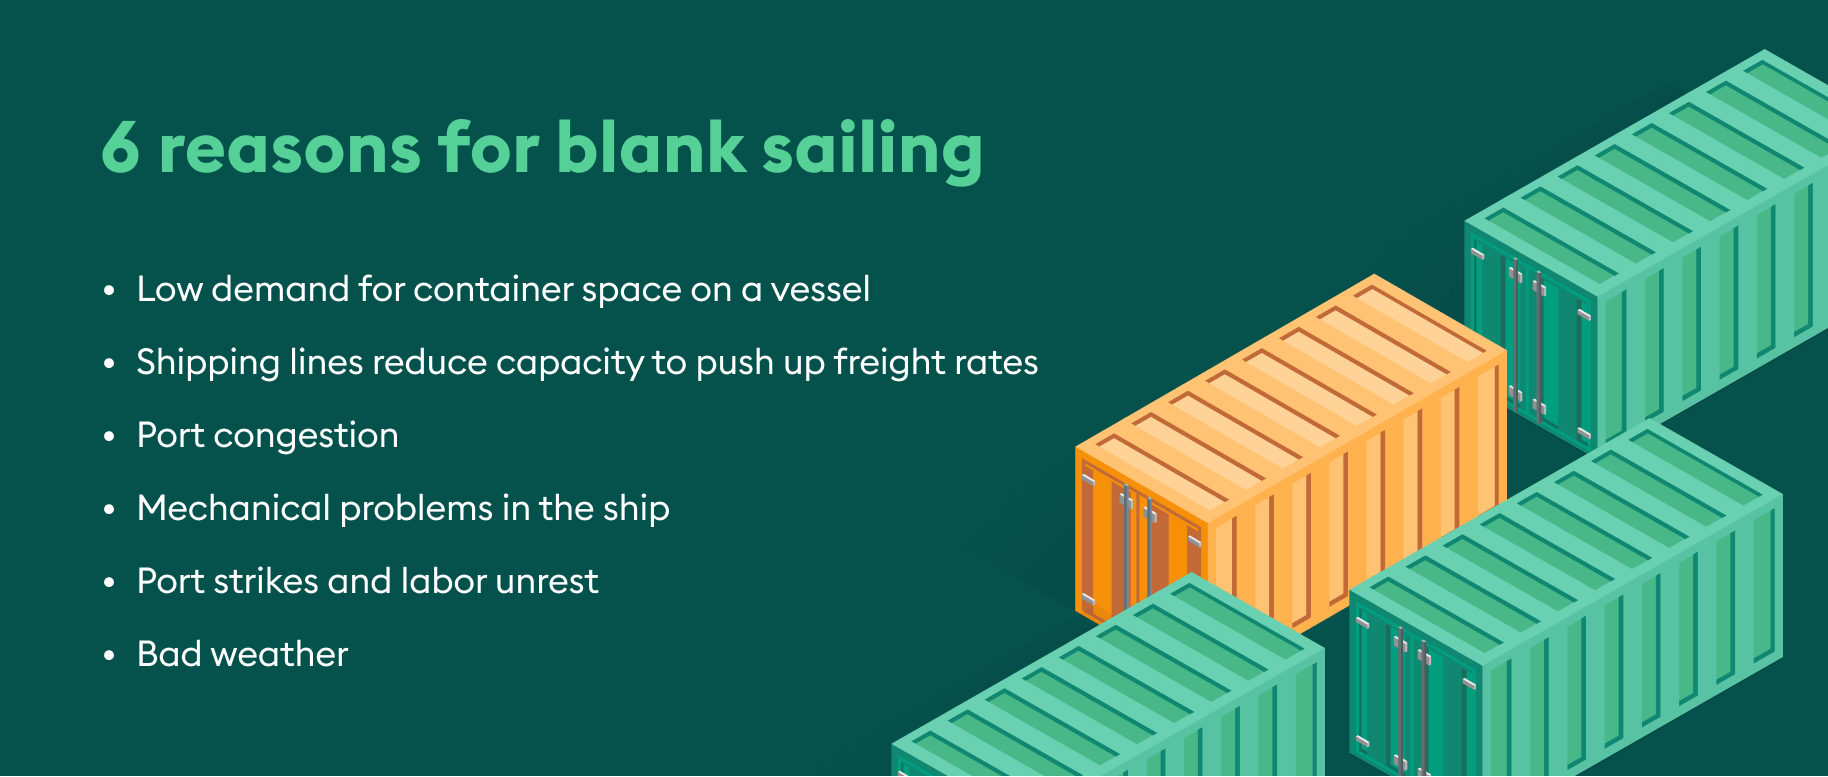 reasons for blank sailings